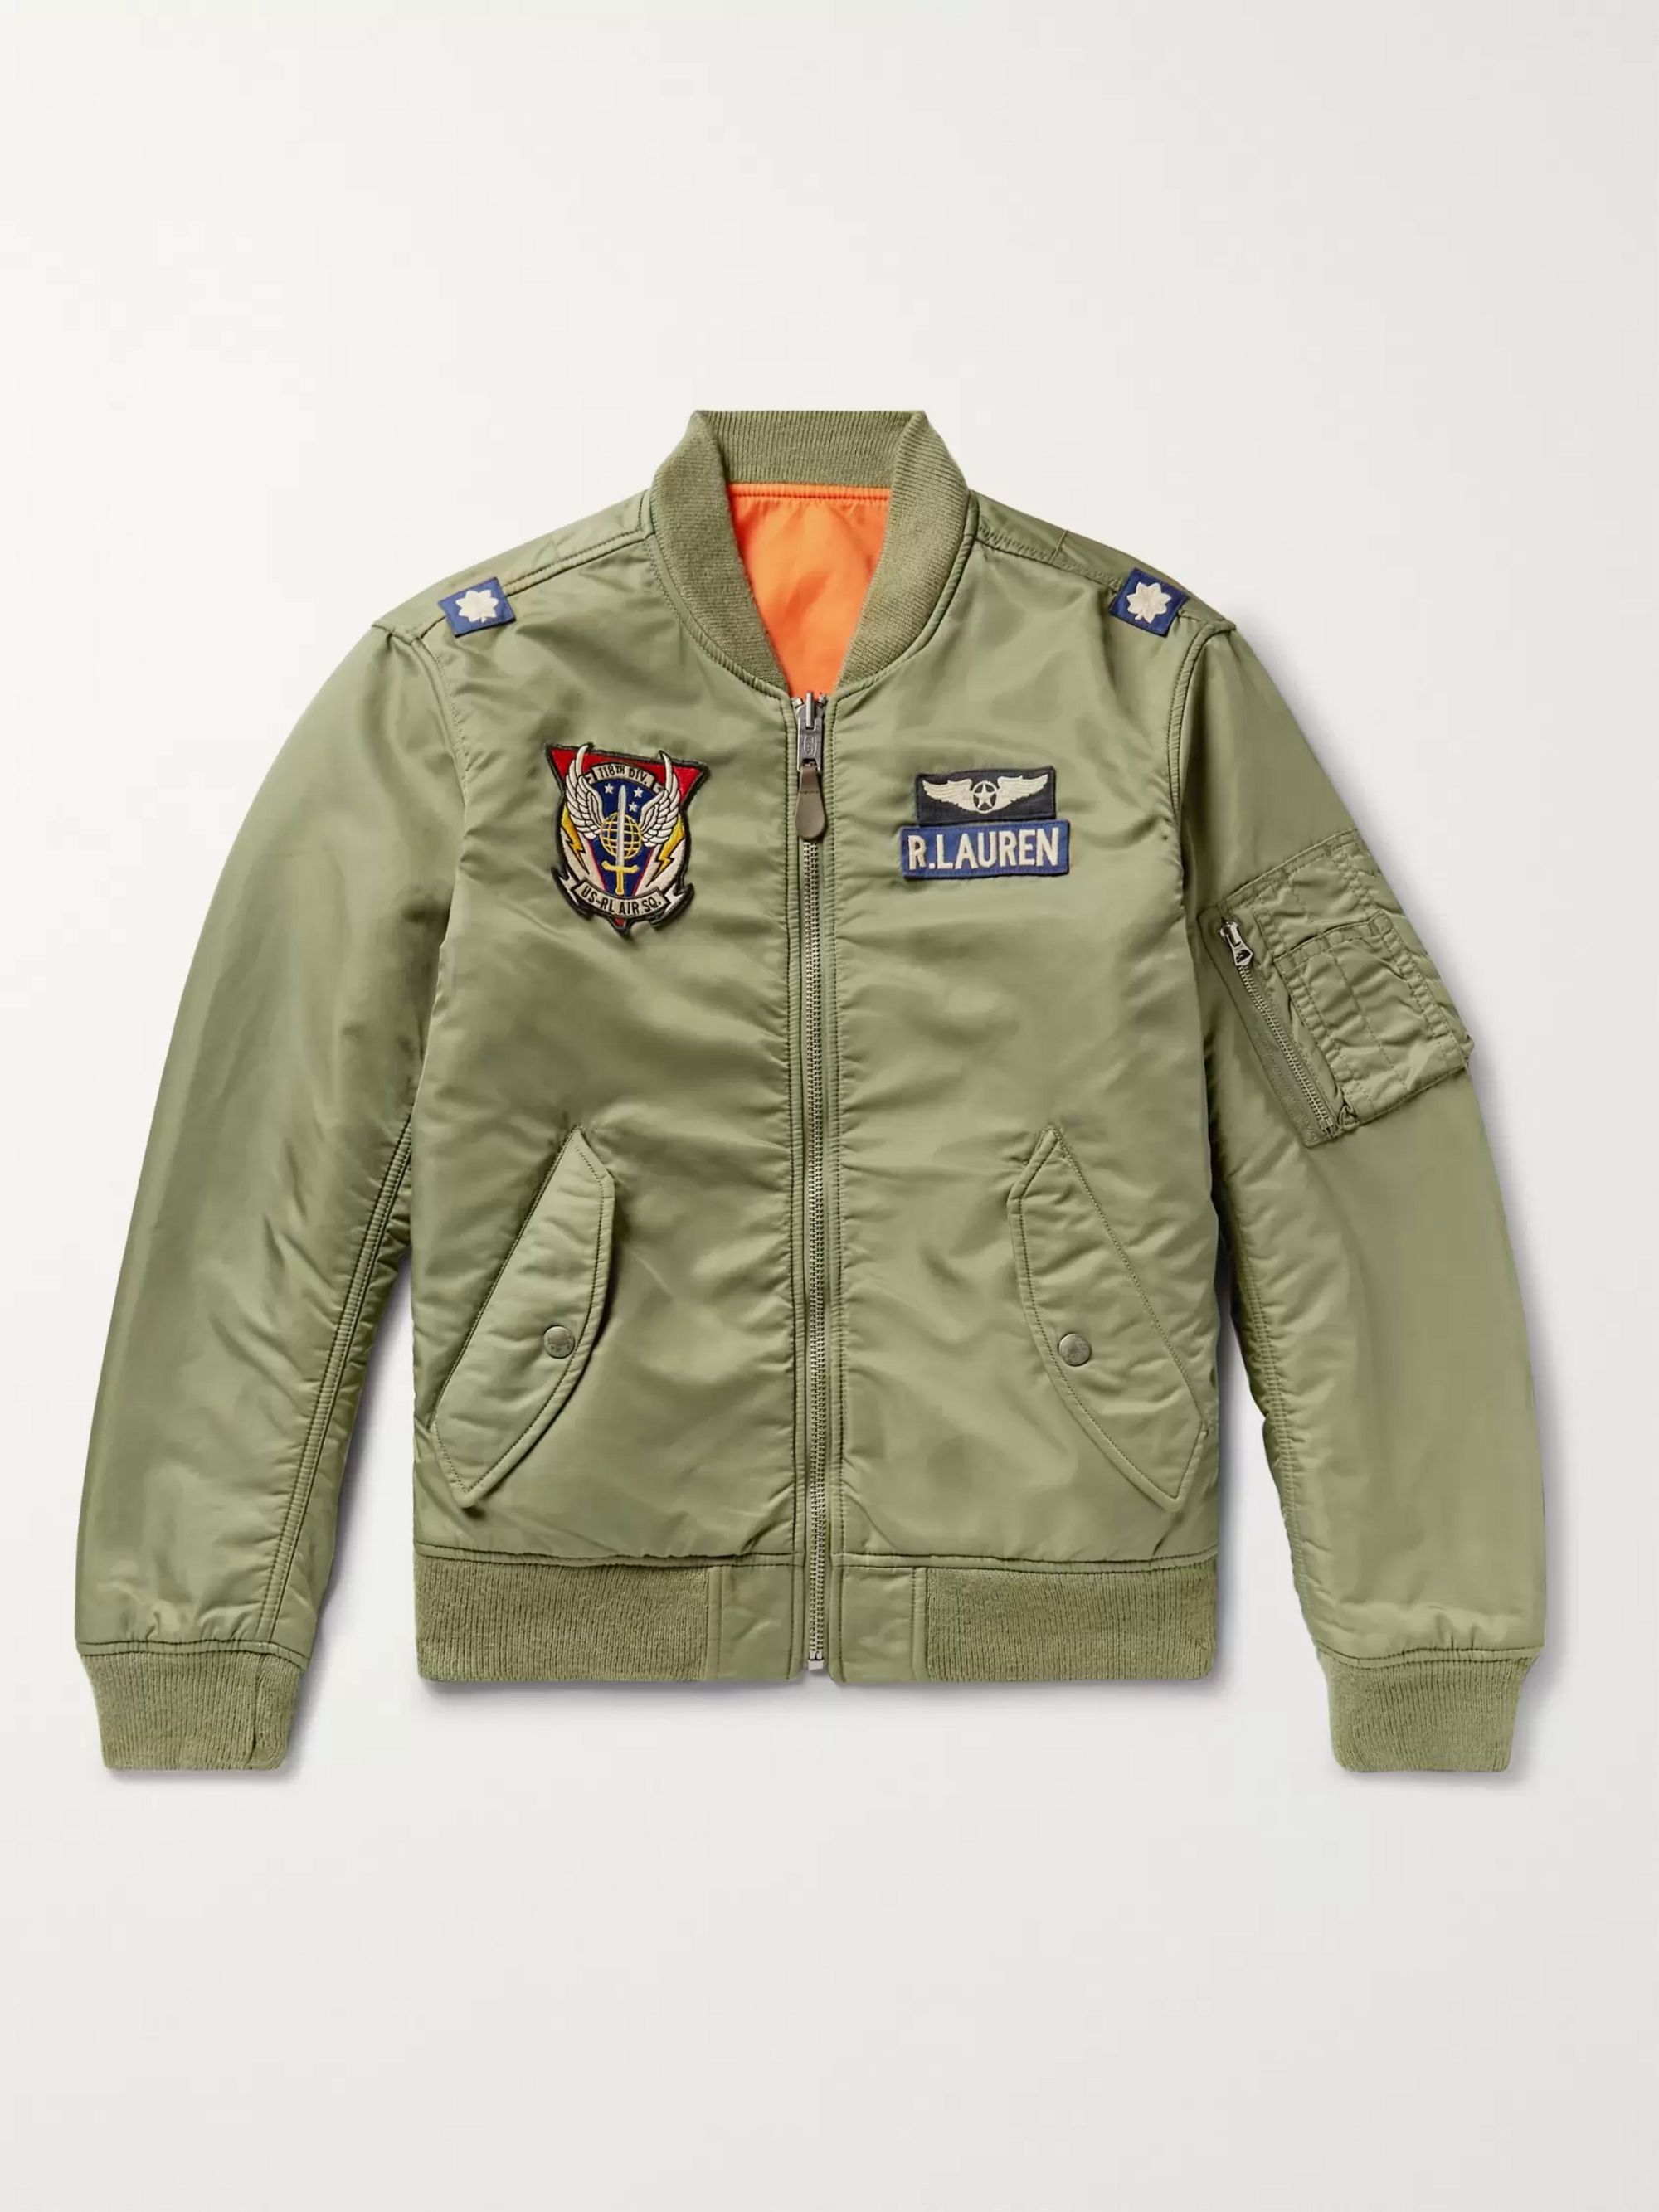 polo and bomber jacket